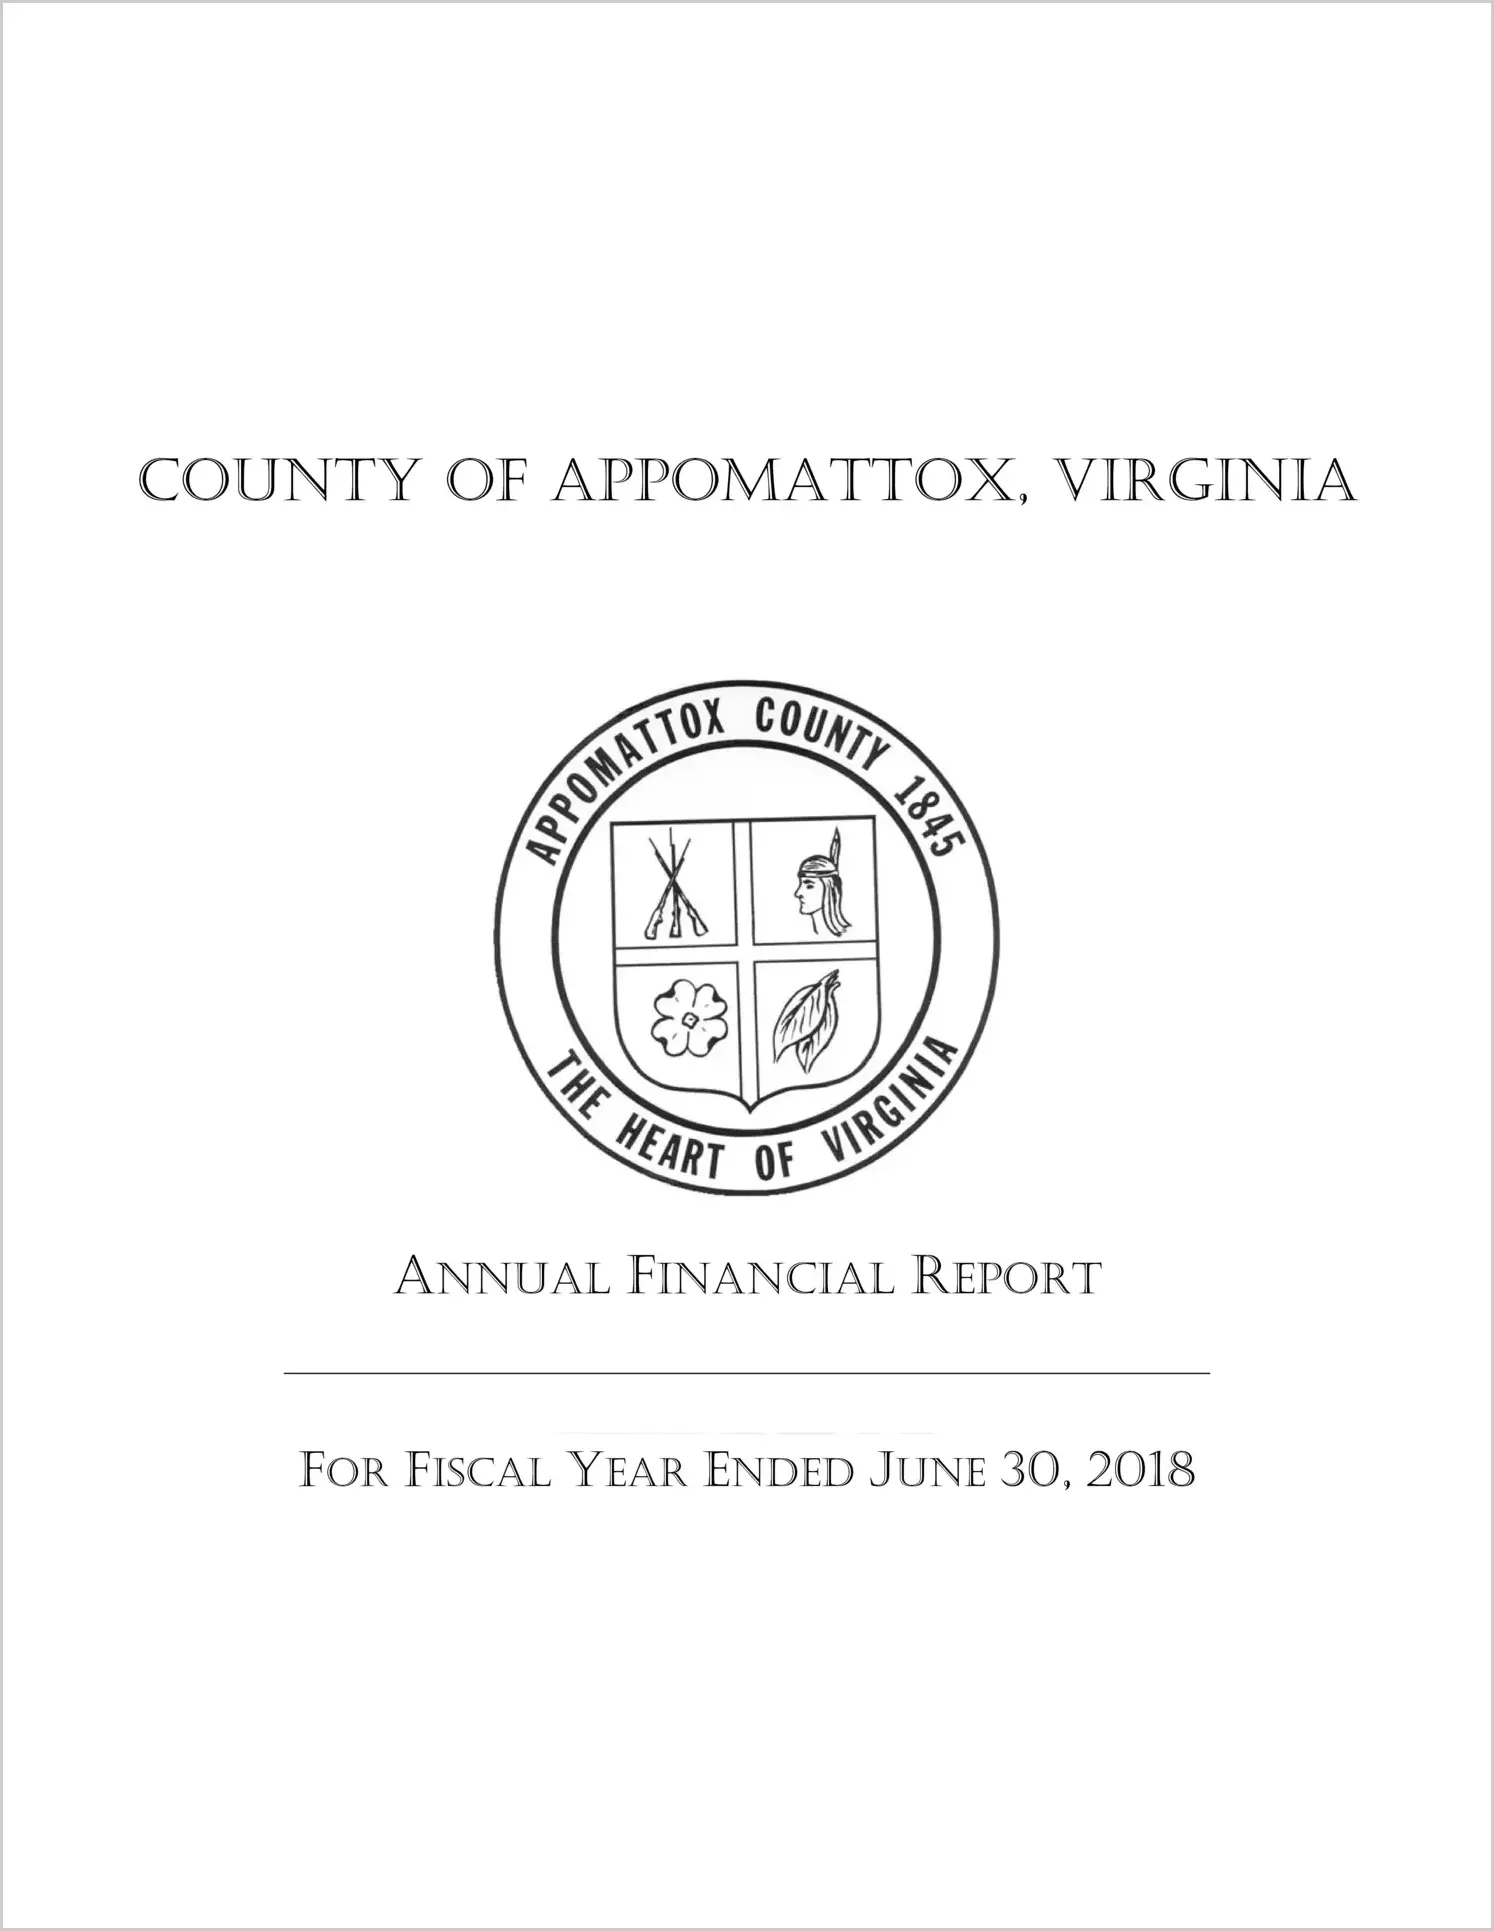 2018 Annual Financial Report for County of Appomattox